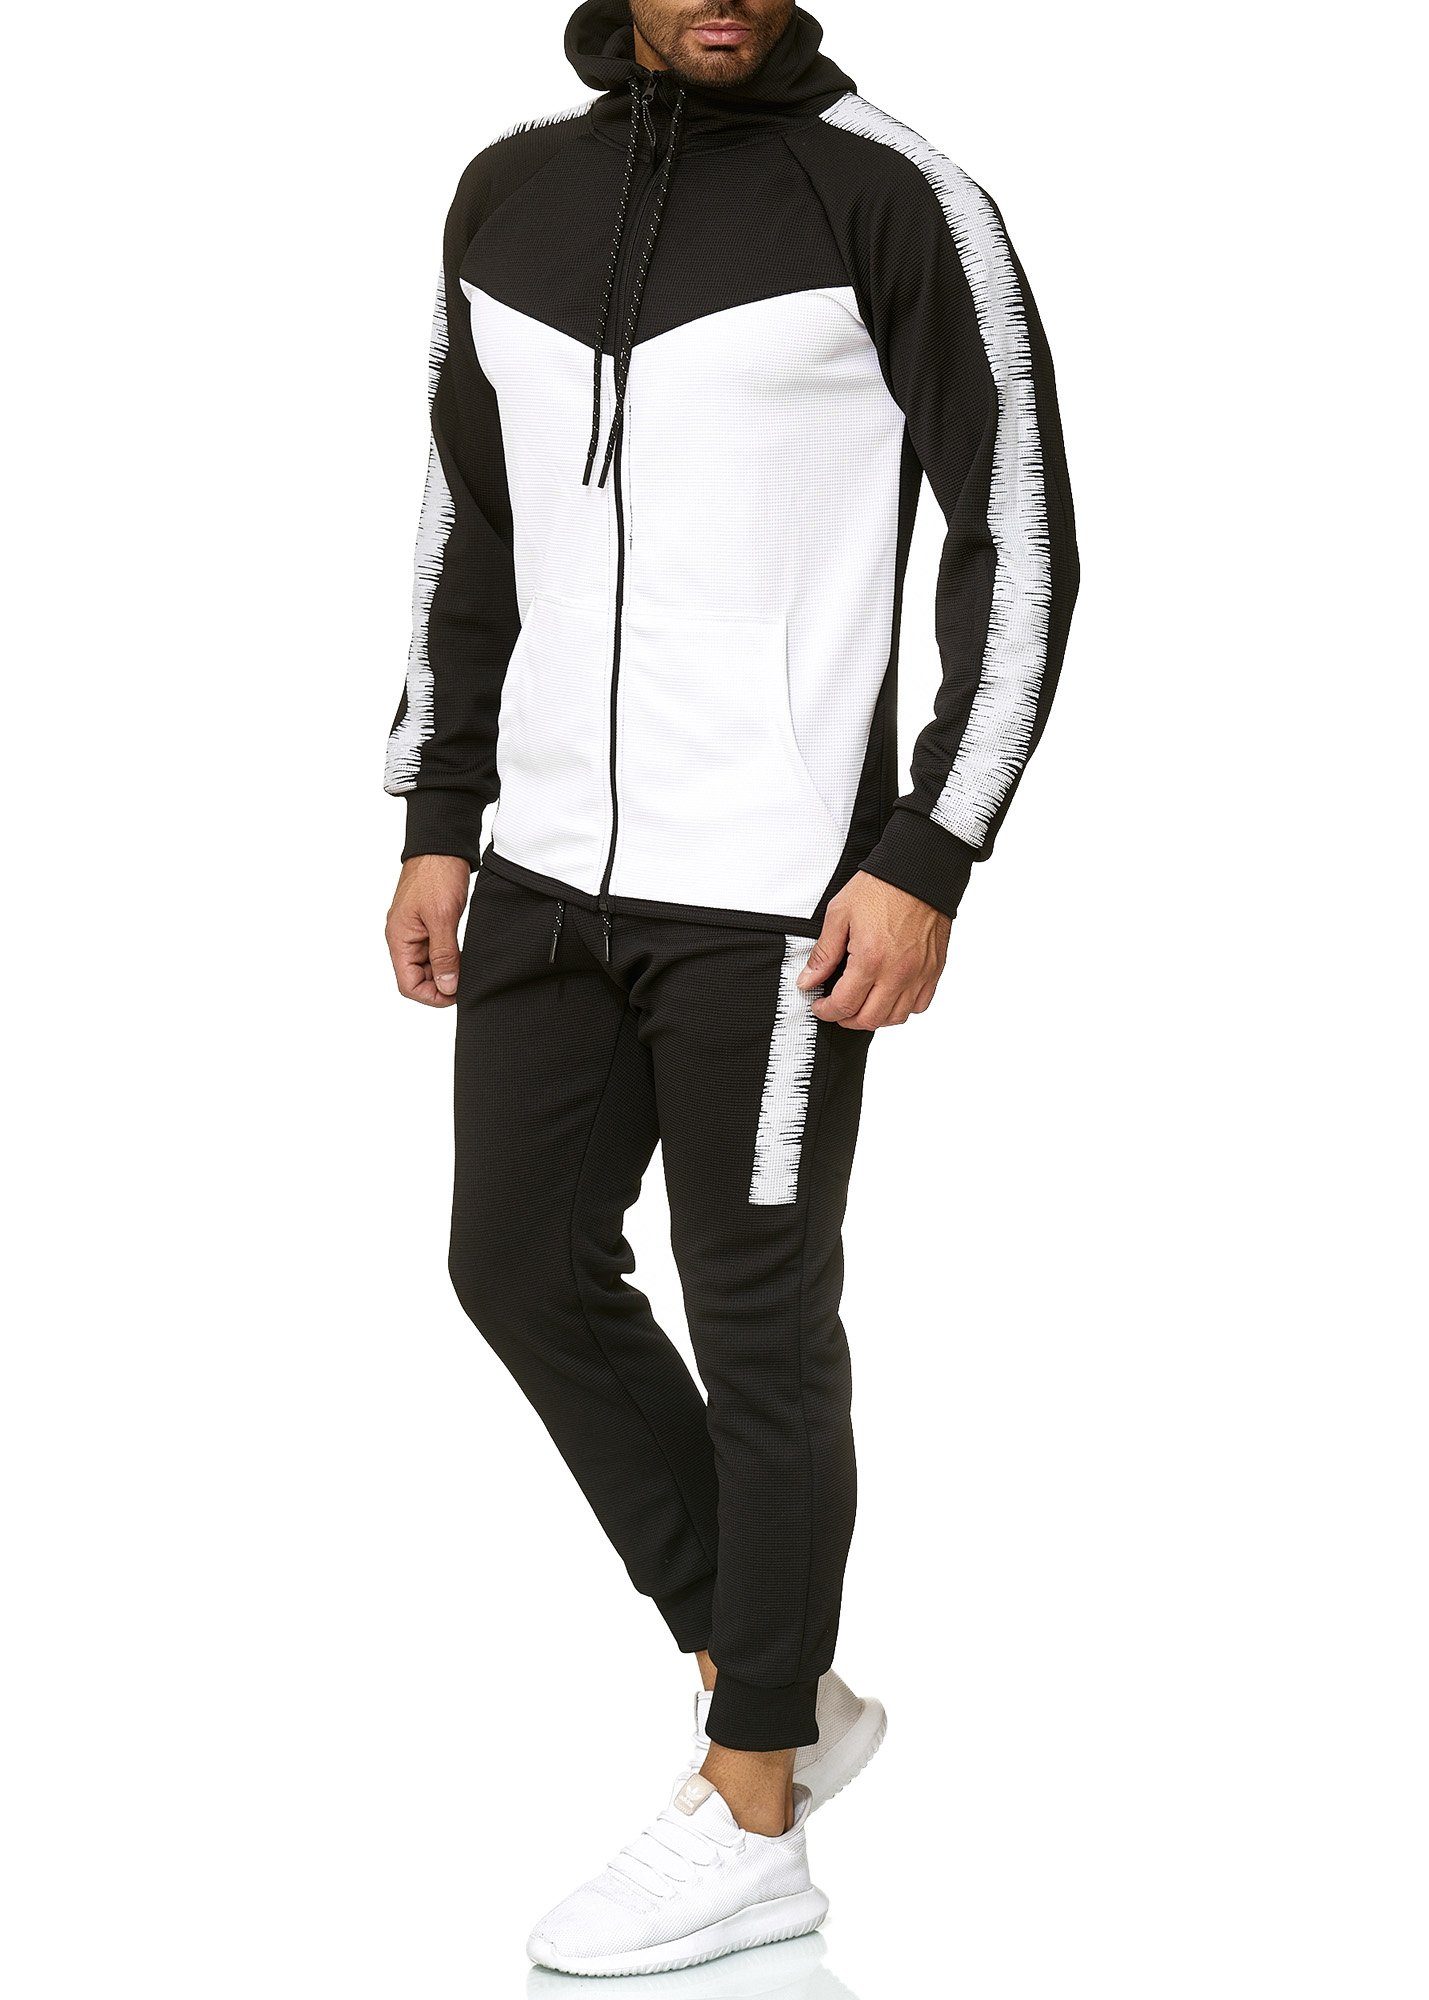 OneRedox Herren Jogginganzug Sportanzug Trainingsanzug Sweatshirt Hose Jogging Anzug Modell 1053